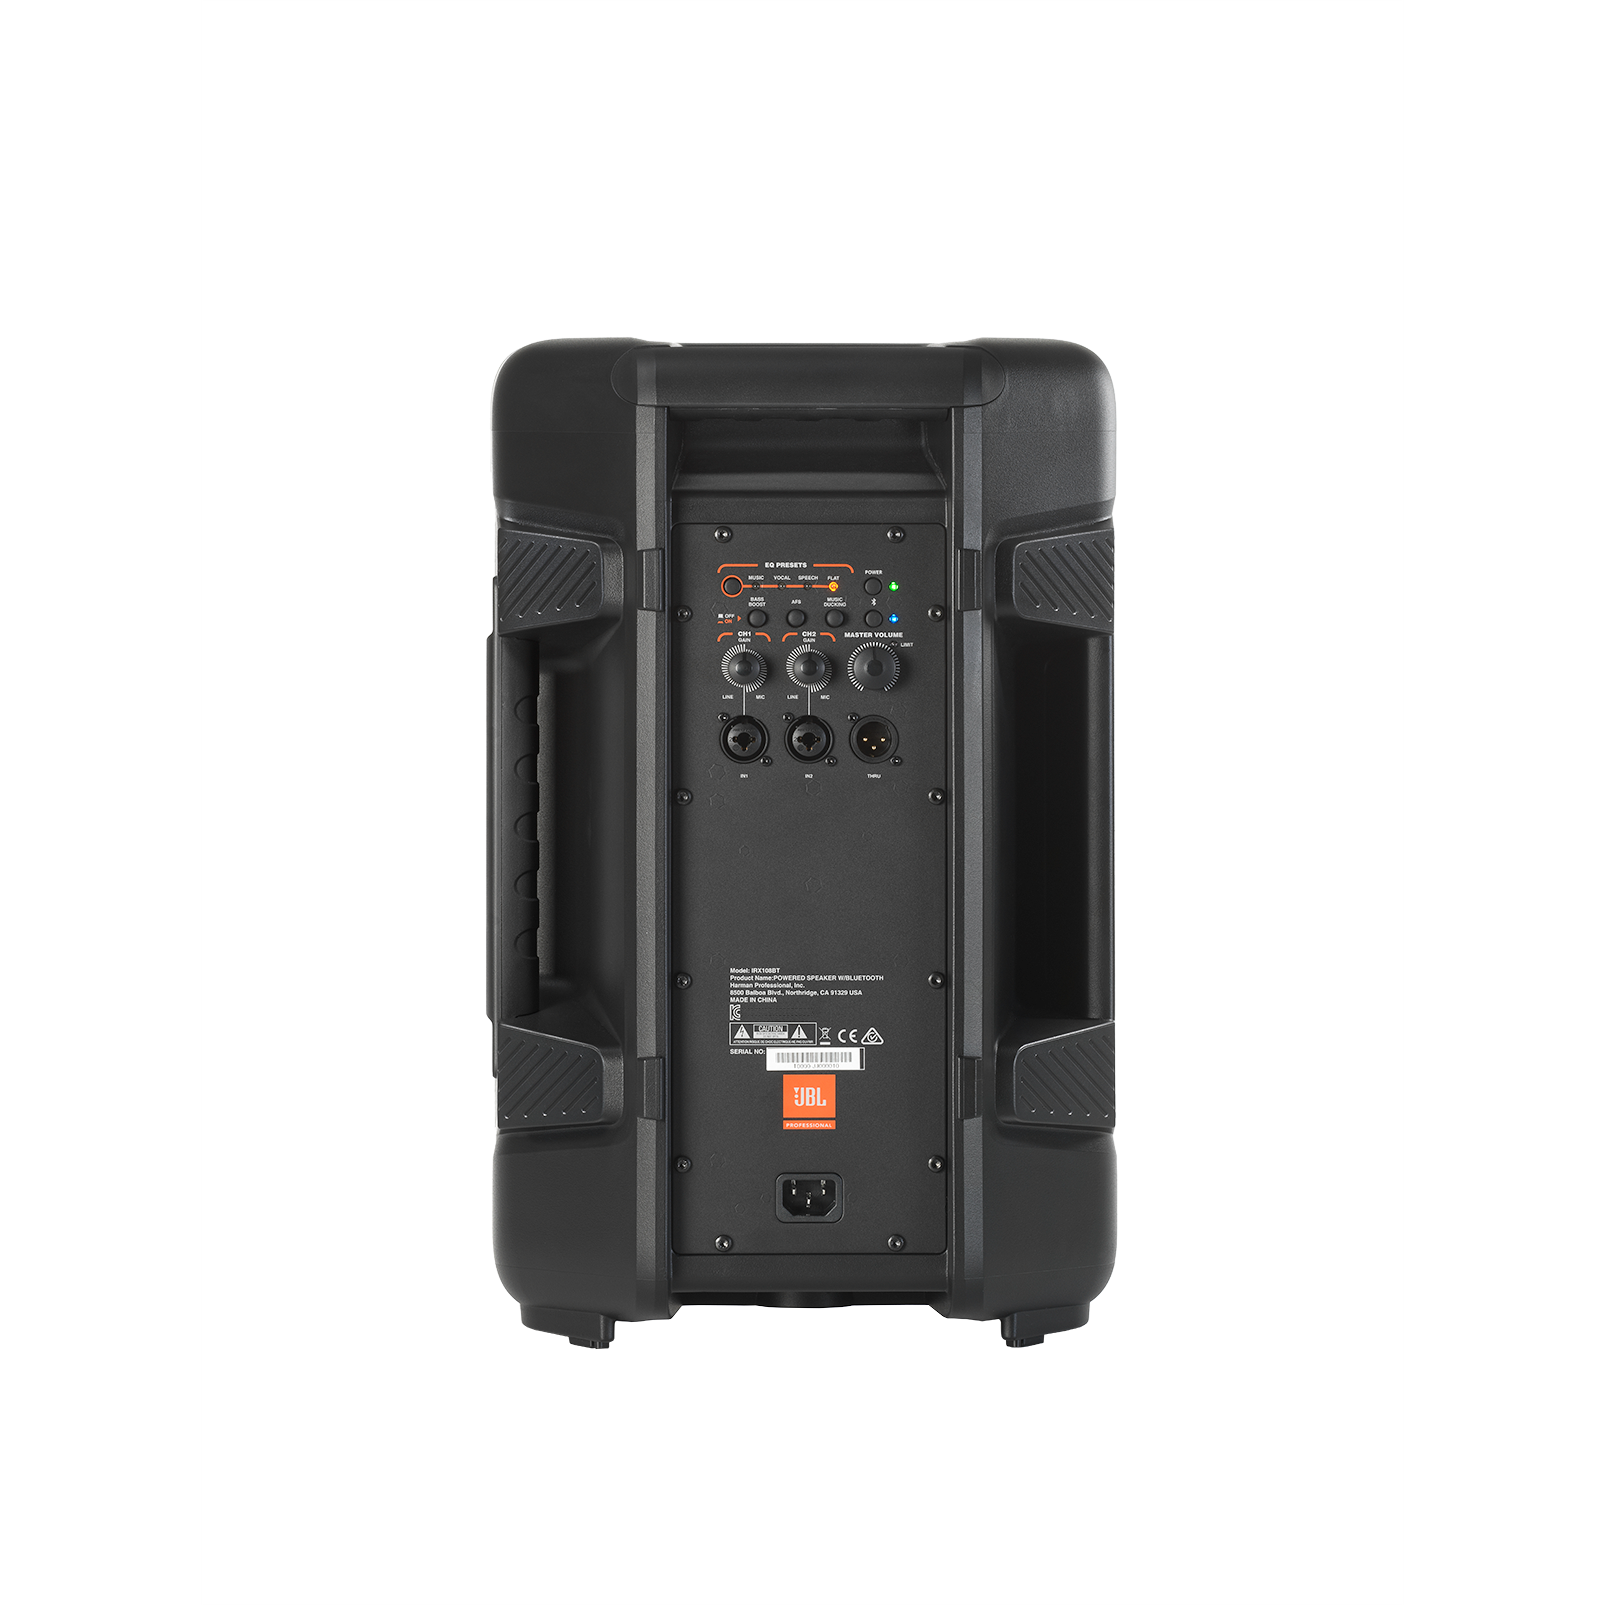 JBL IRX108BT - Black - Powered 8” Portable Speaker with Bluetooth® - Back